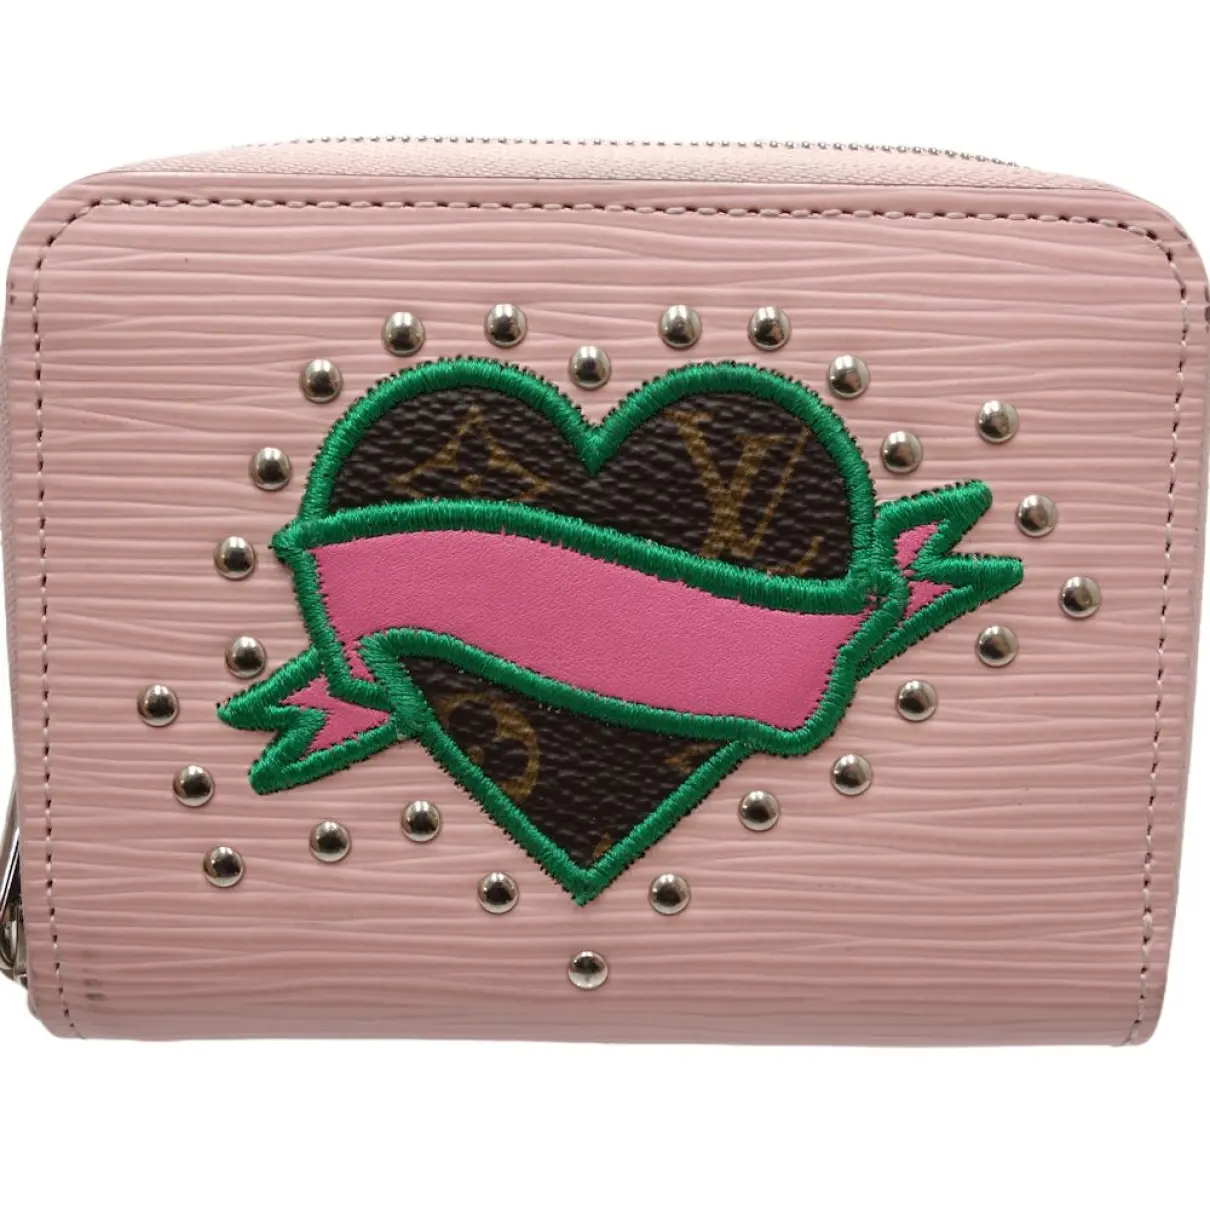 Buy Louis Vuitton Zippy leather wallet online